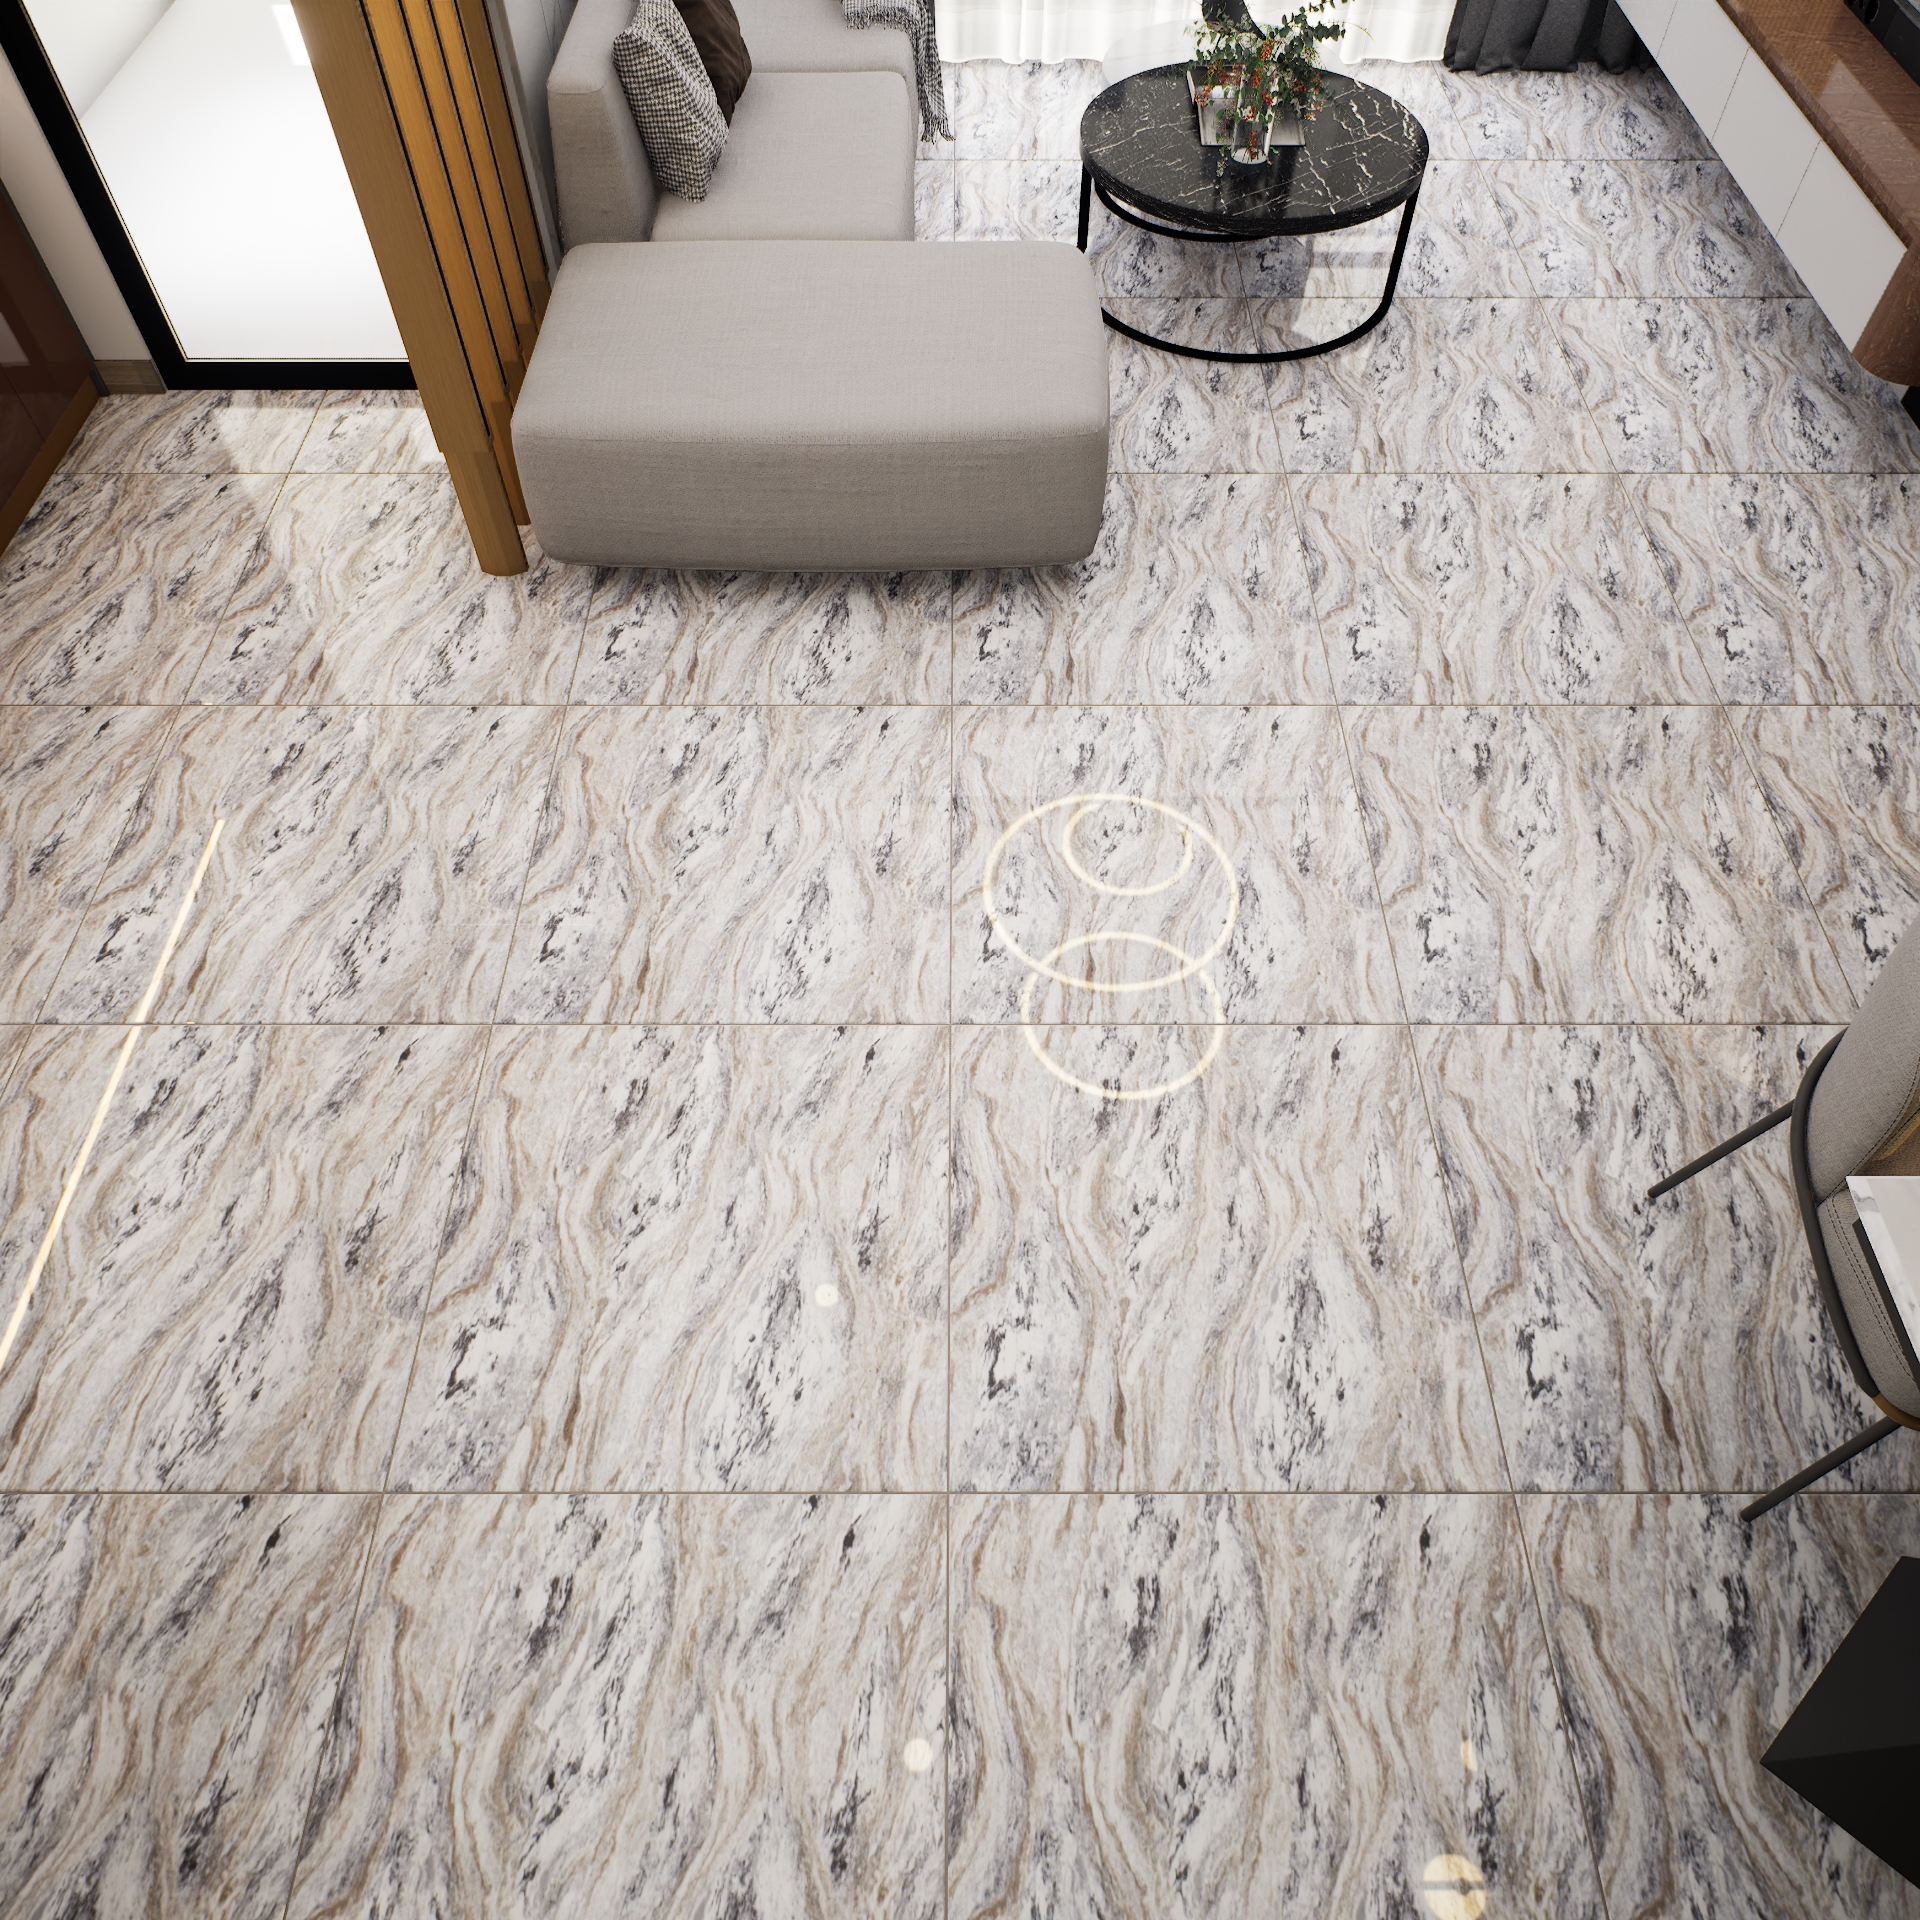 How To Clean Vitrified Floor Tiles? - Sentosa Granito Pvt. Ltd